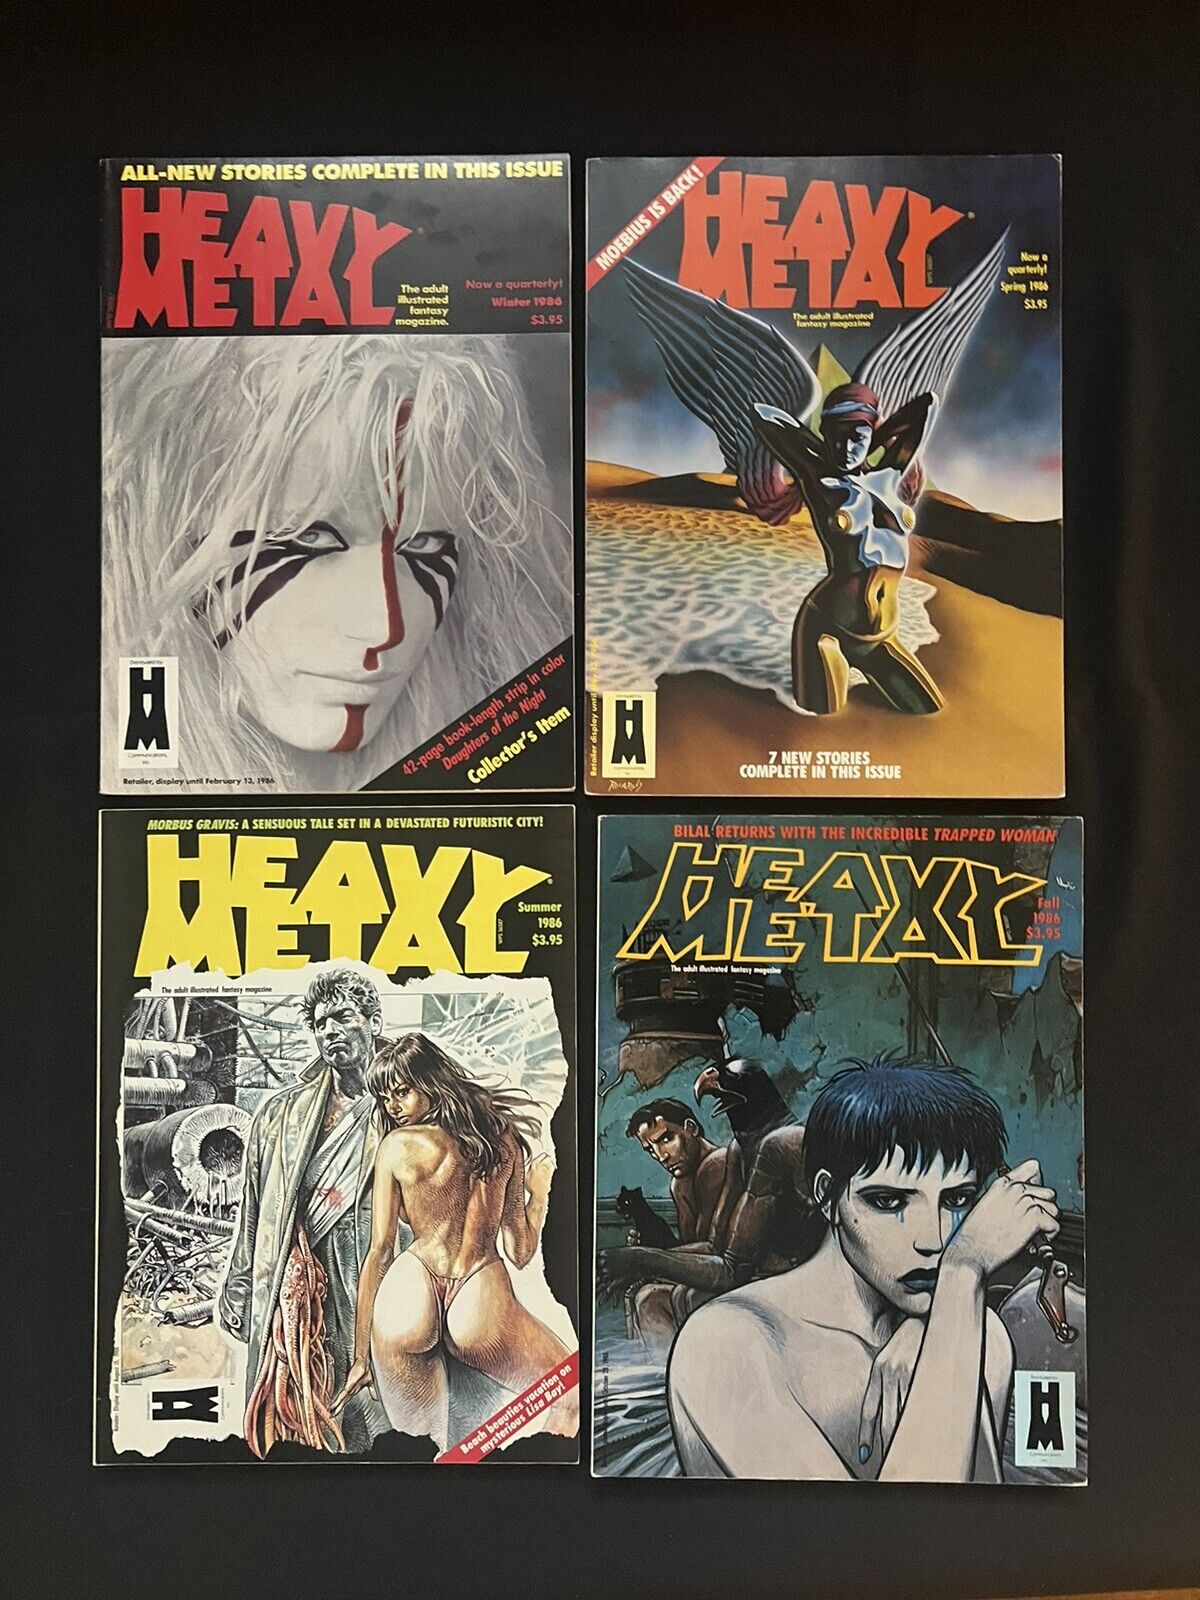 Heavy Metal Adult Illustrated Fantasy Magazine 1986 Complete Quarterly set